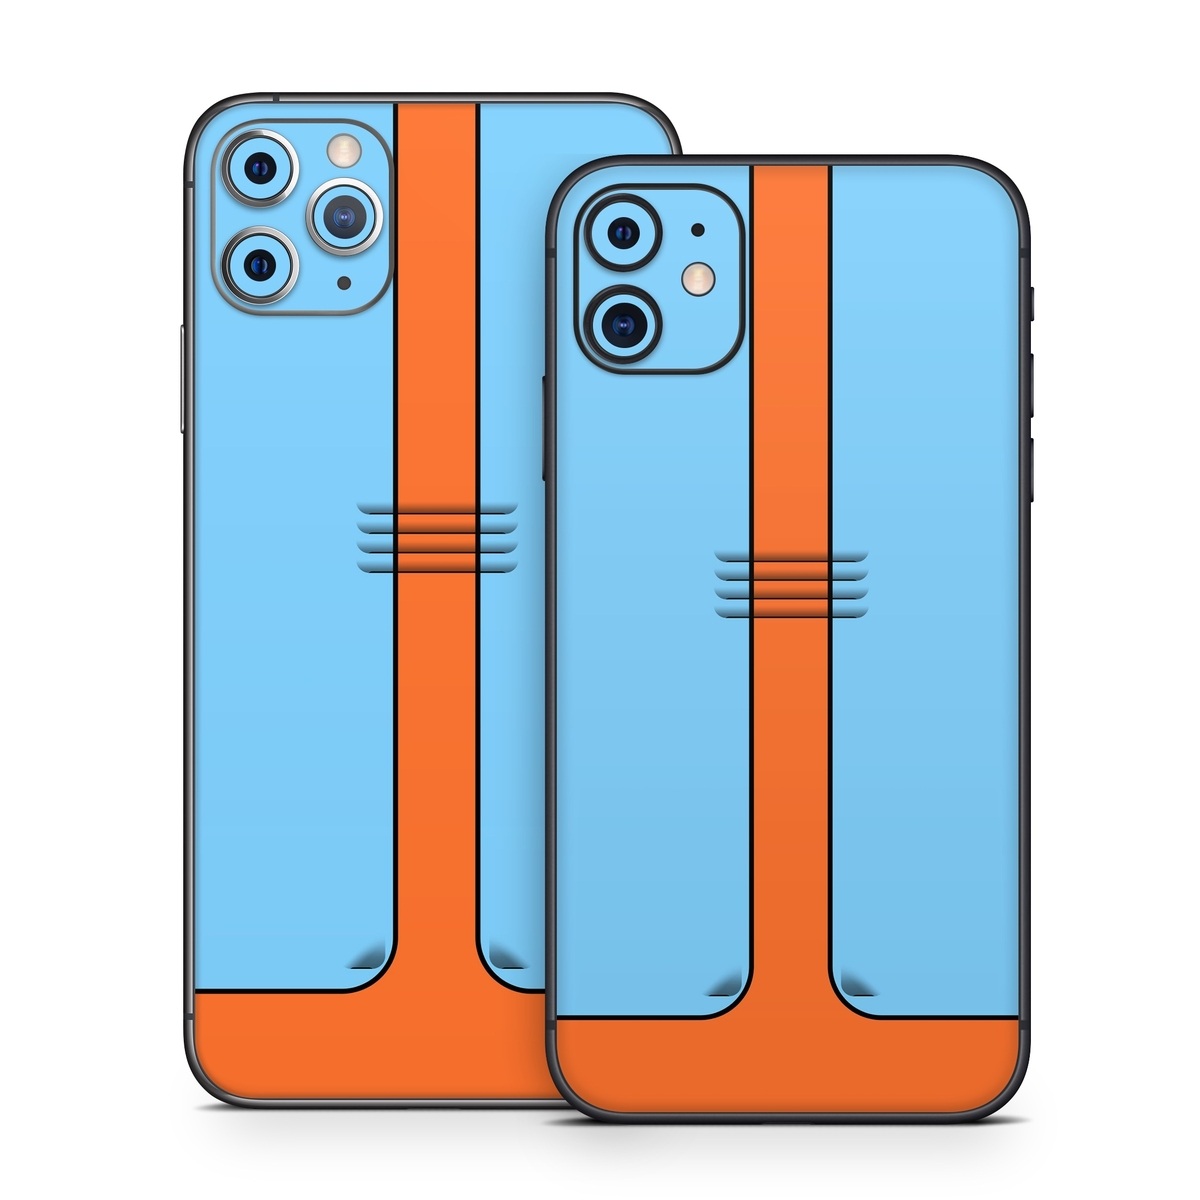 iPhone 11 Skin design of Line with blue, orange, black colors